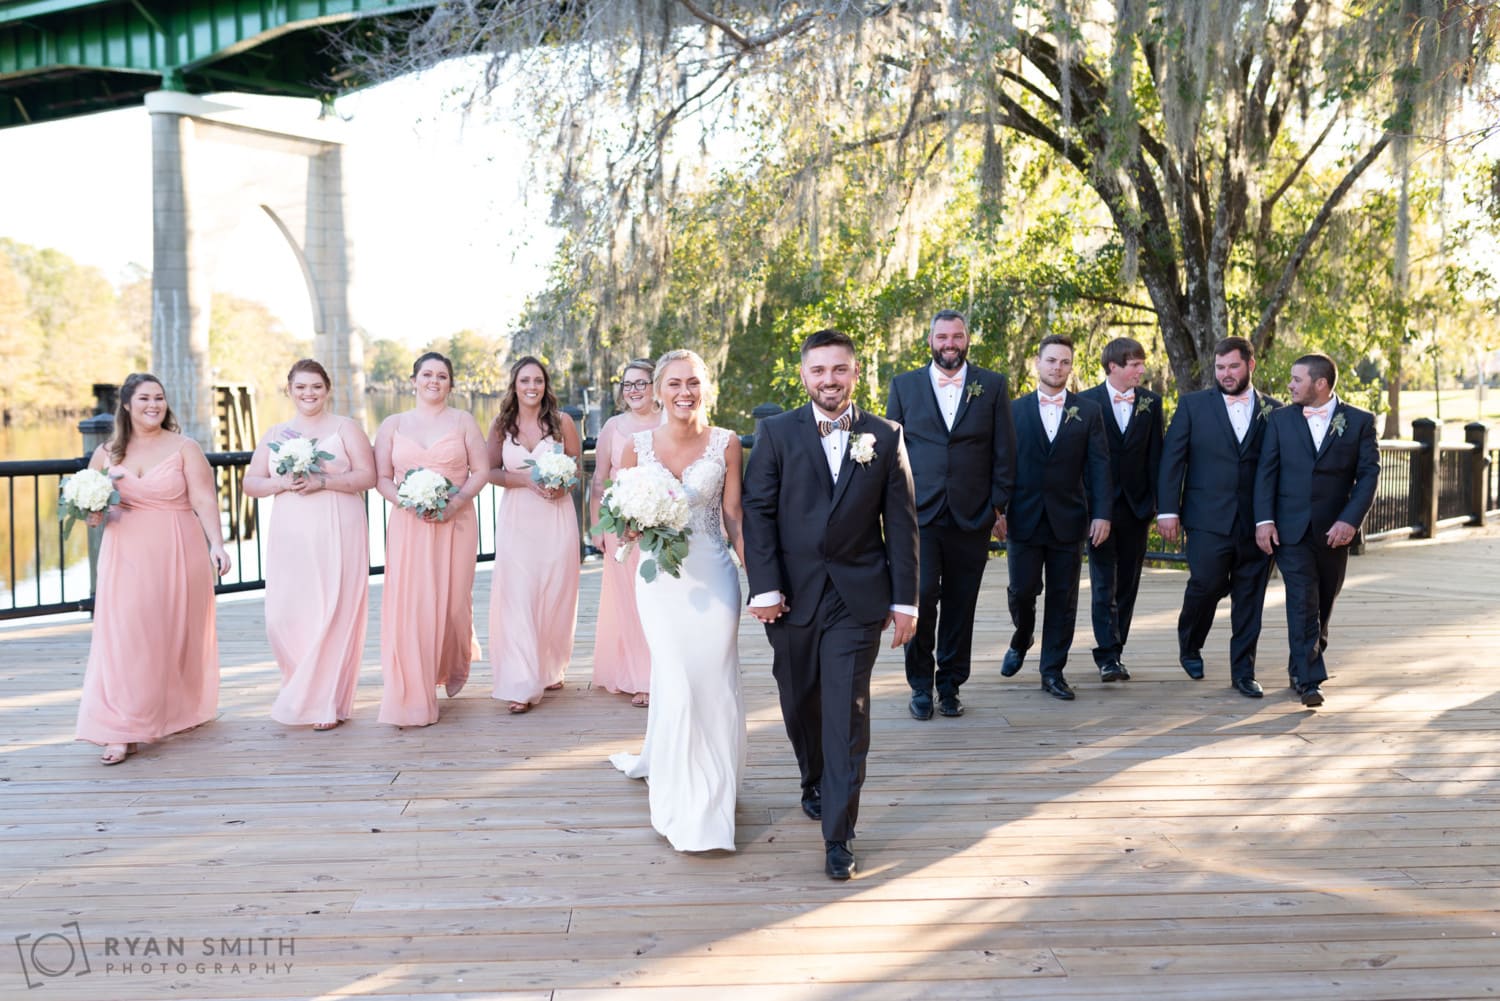 Wedding party walking towards the camera - Conway River Walk